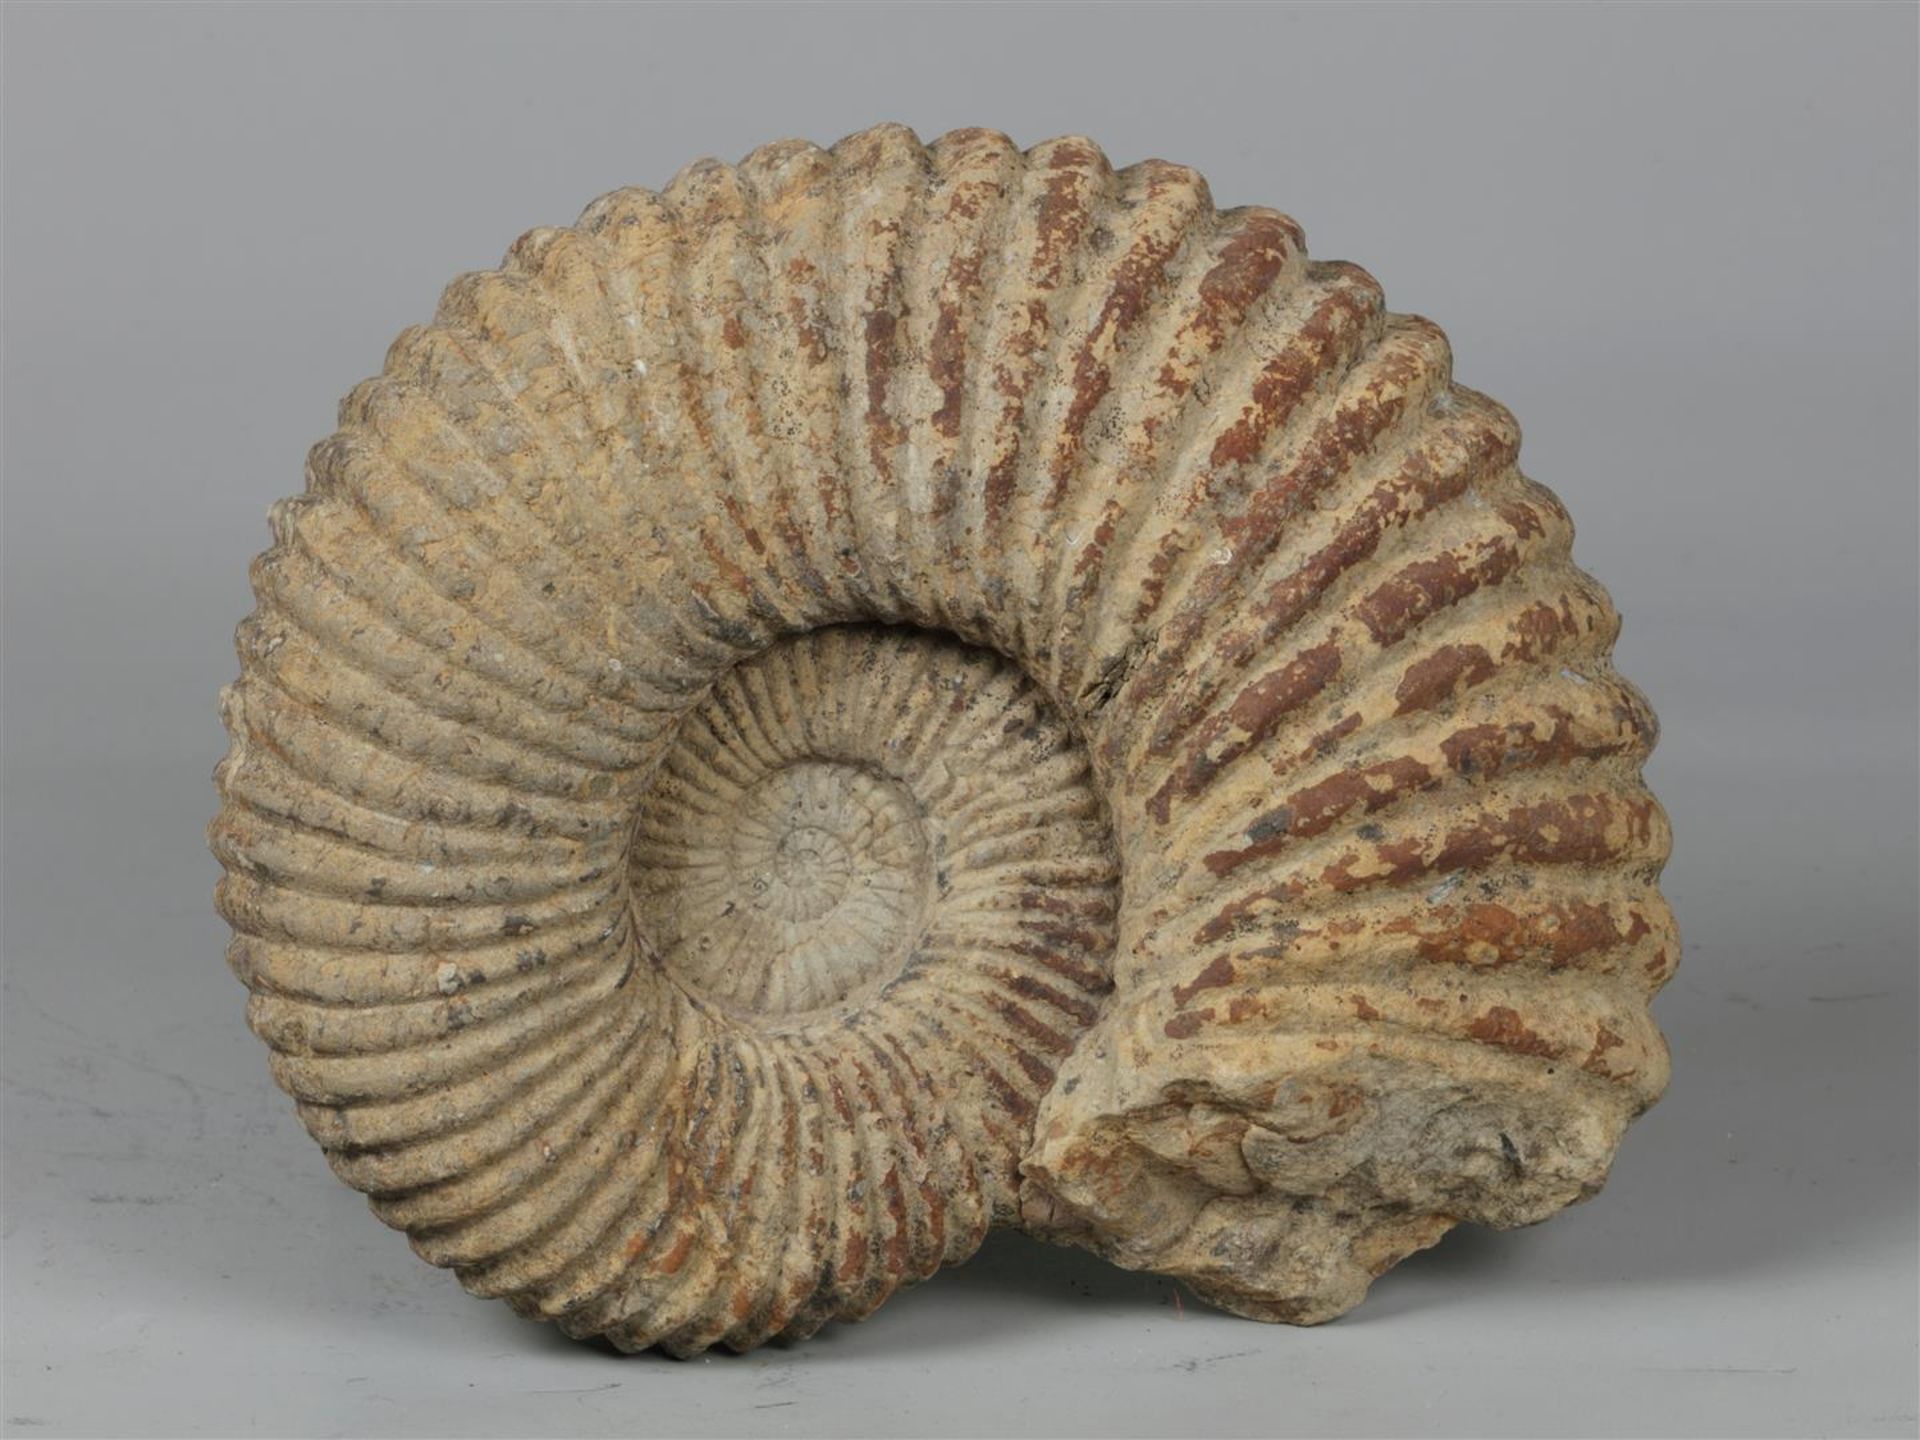 An ammonite fossil " Kranaosphinctes roedereri". Jurassic -